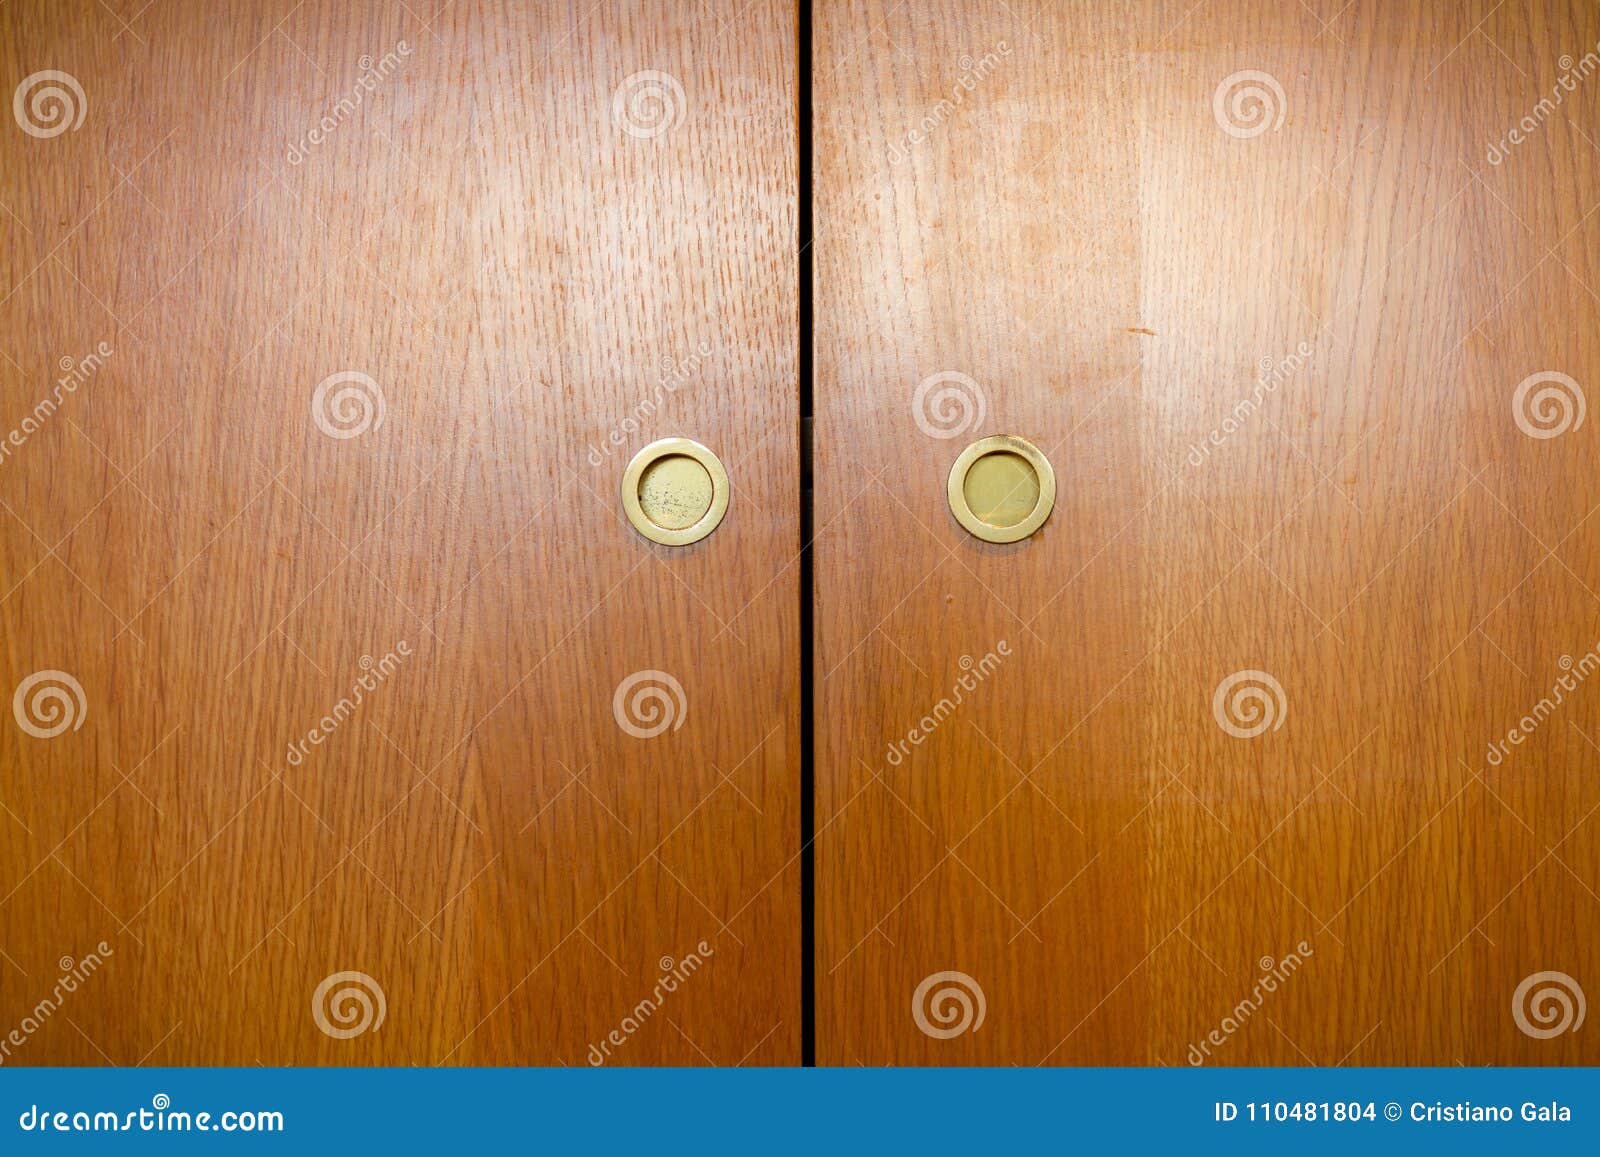 Wooden Wardrobe Handles Stock Photo Image Of Locker 110481804